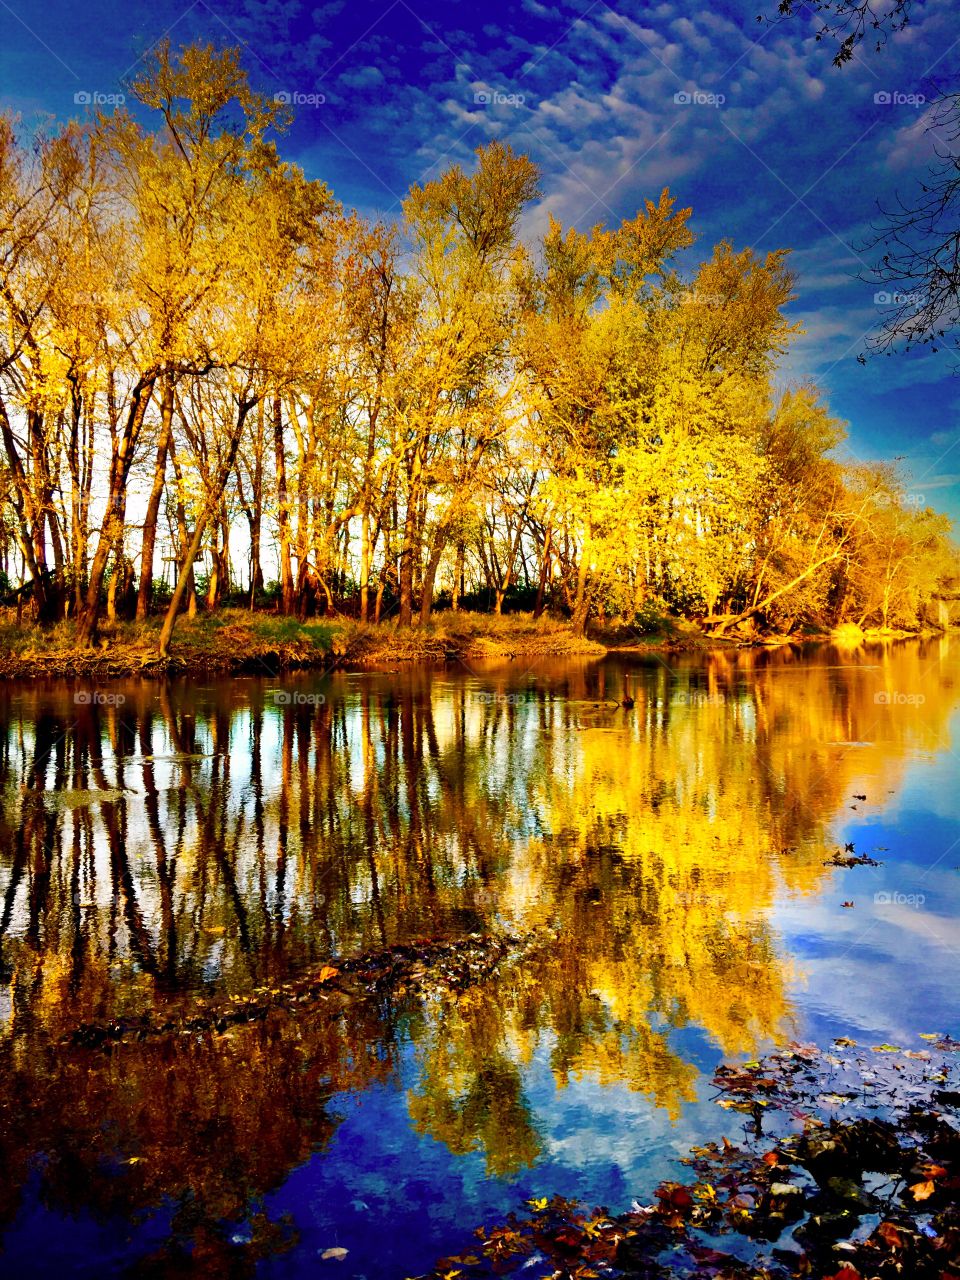 Fall reflections 